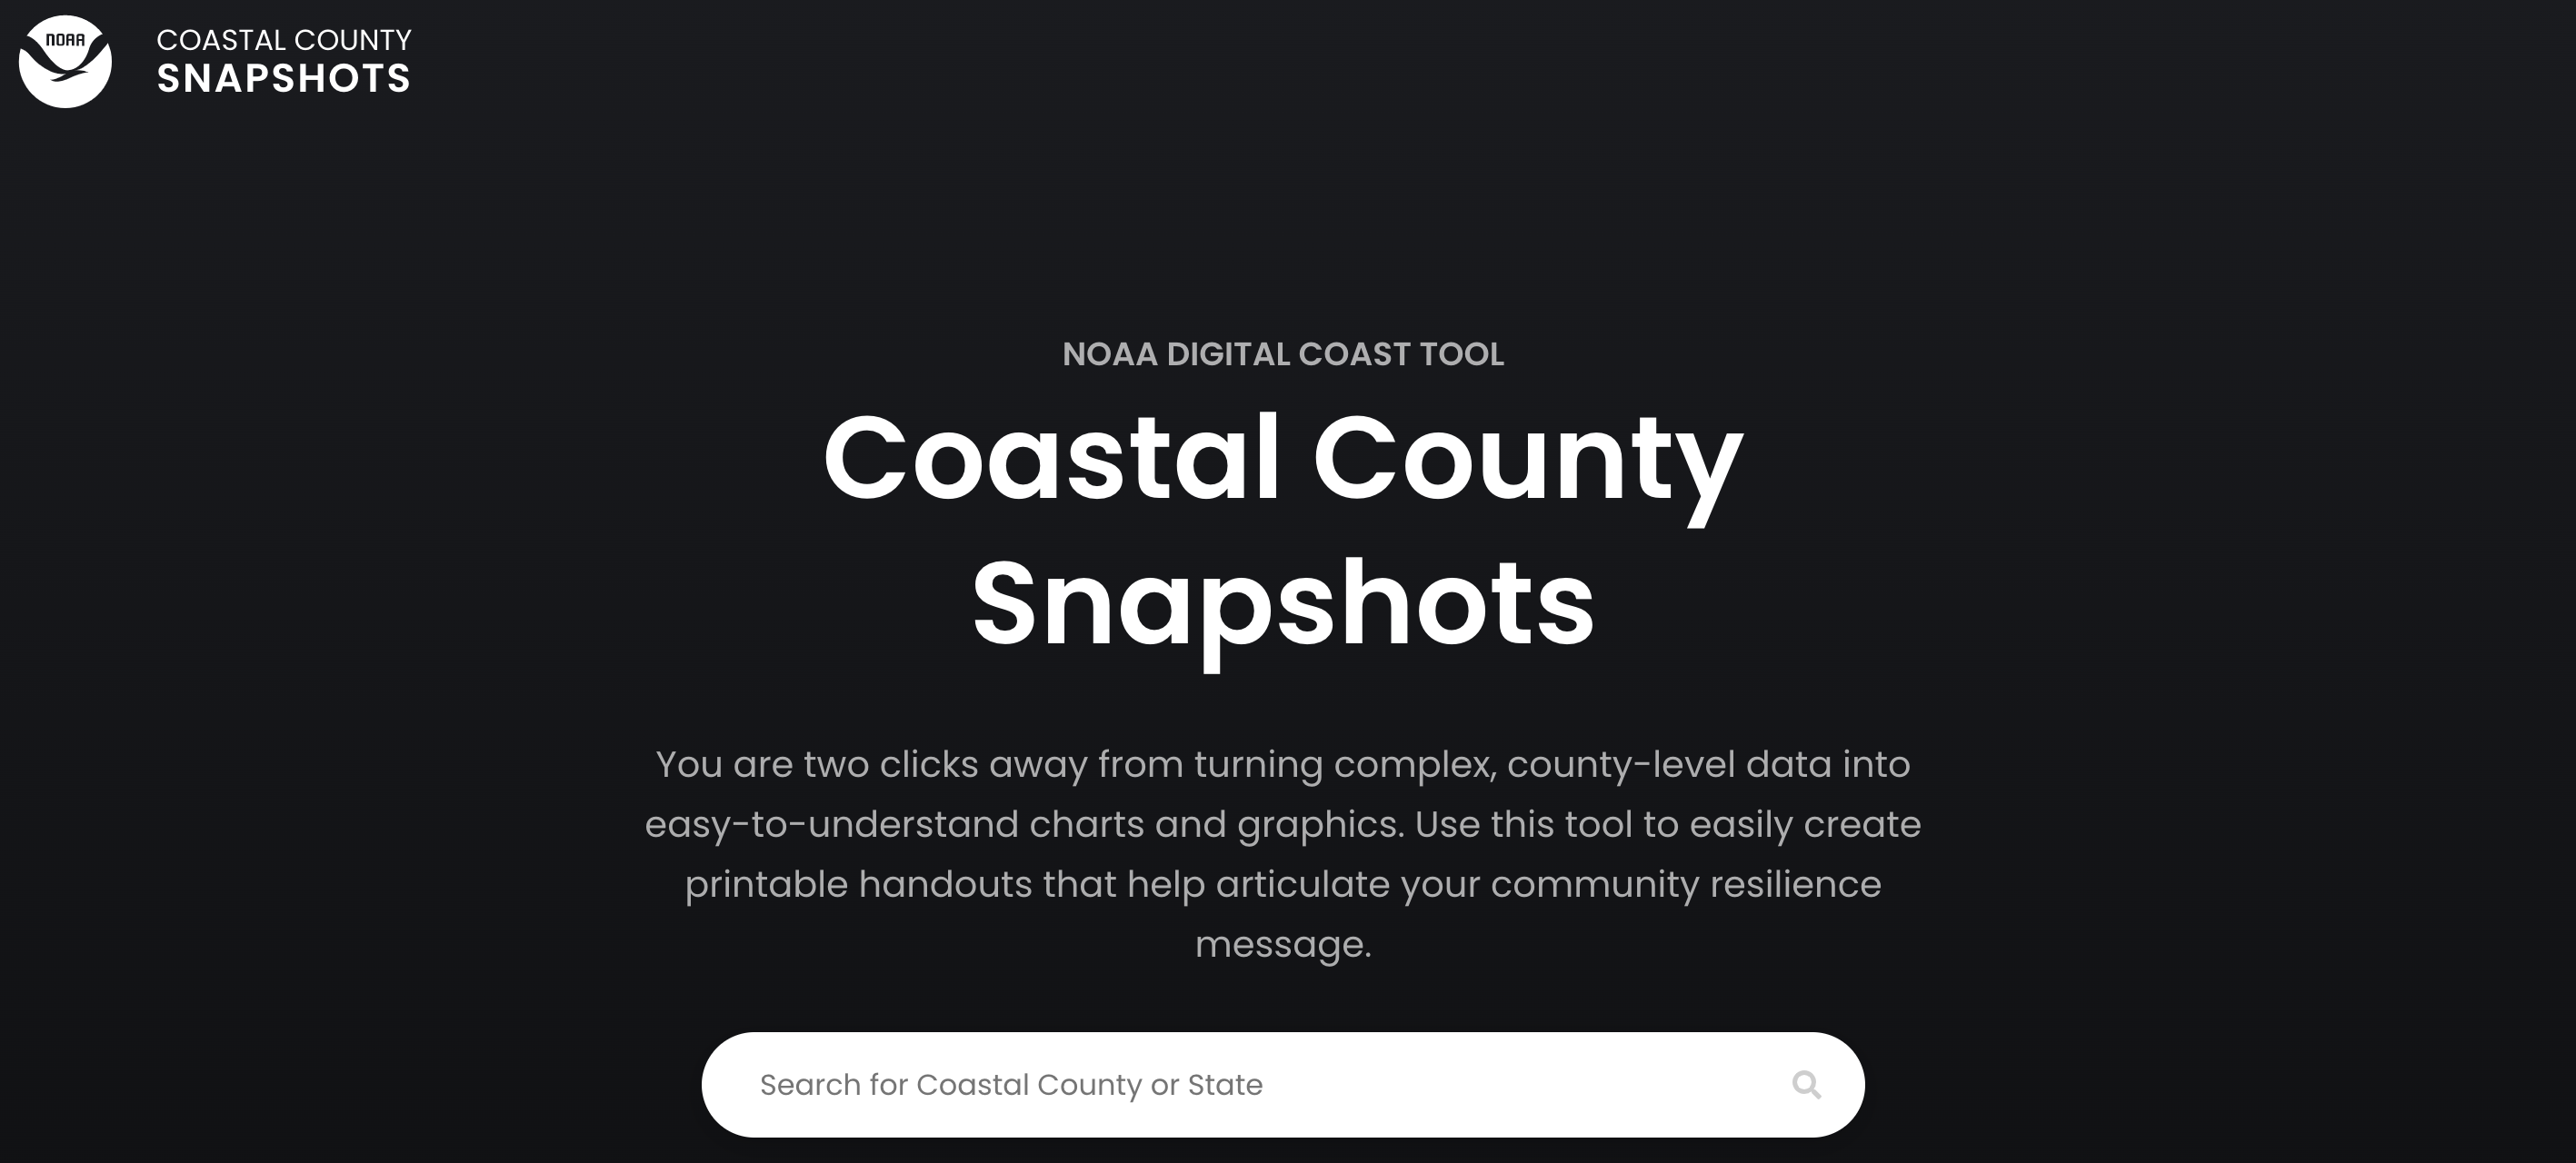 NOAA Coastal County Snapshots